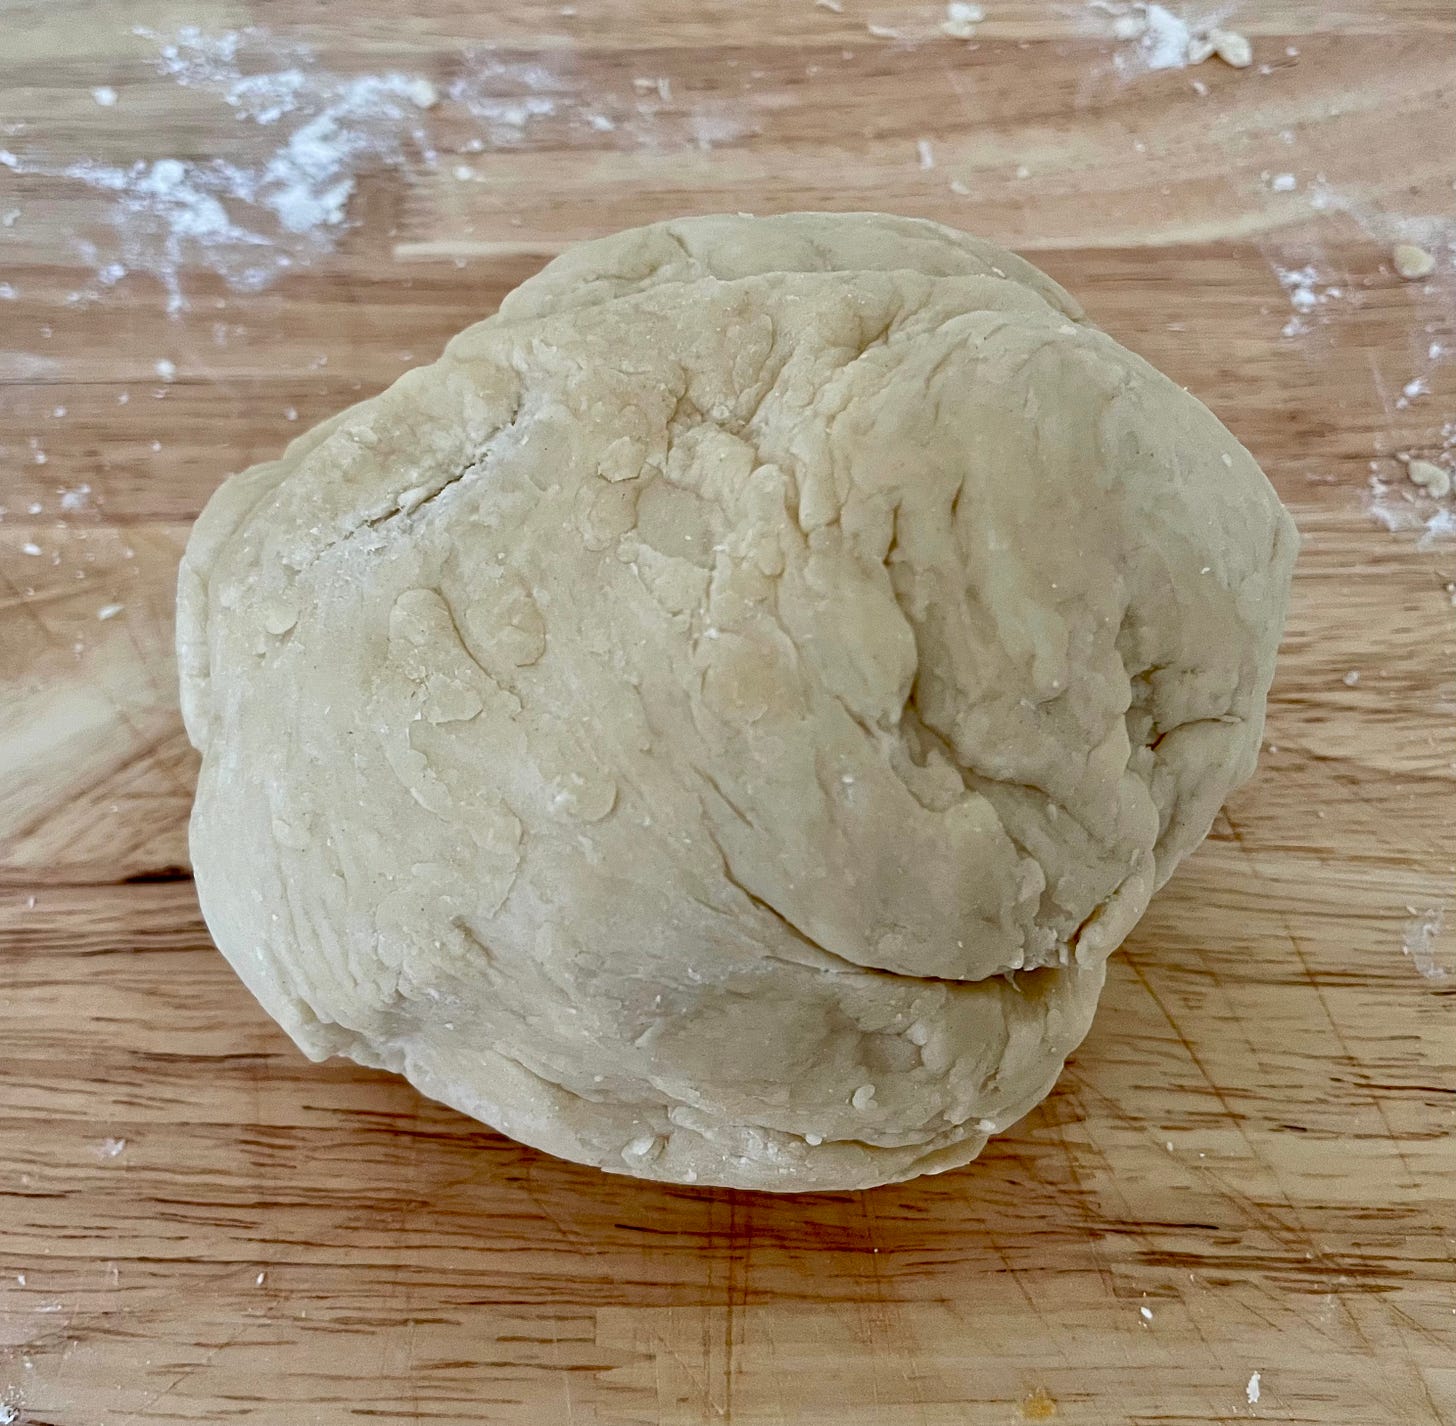 Dough after 10 min kneading